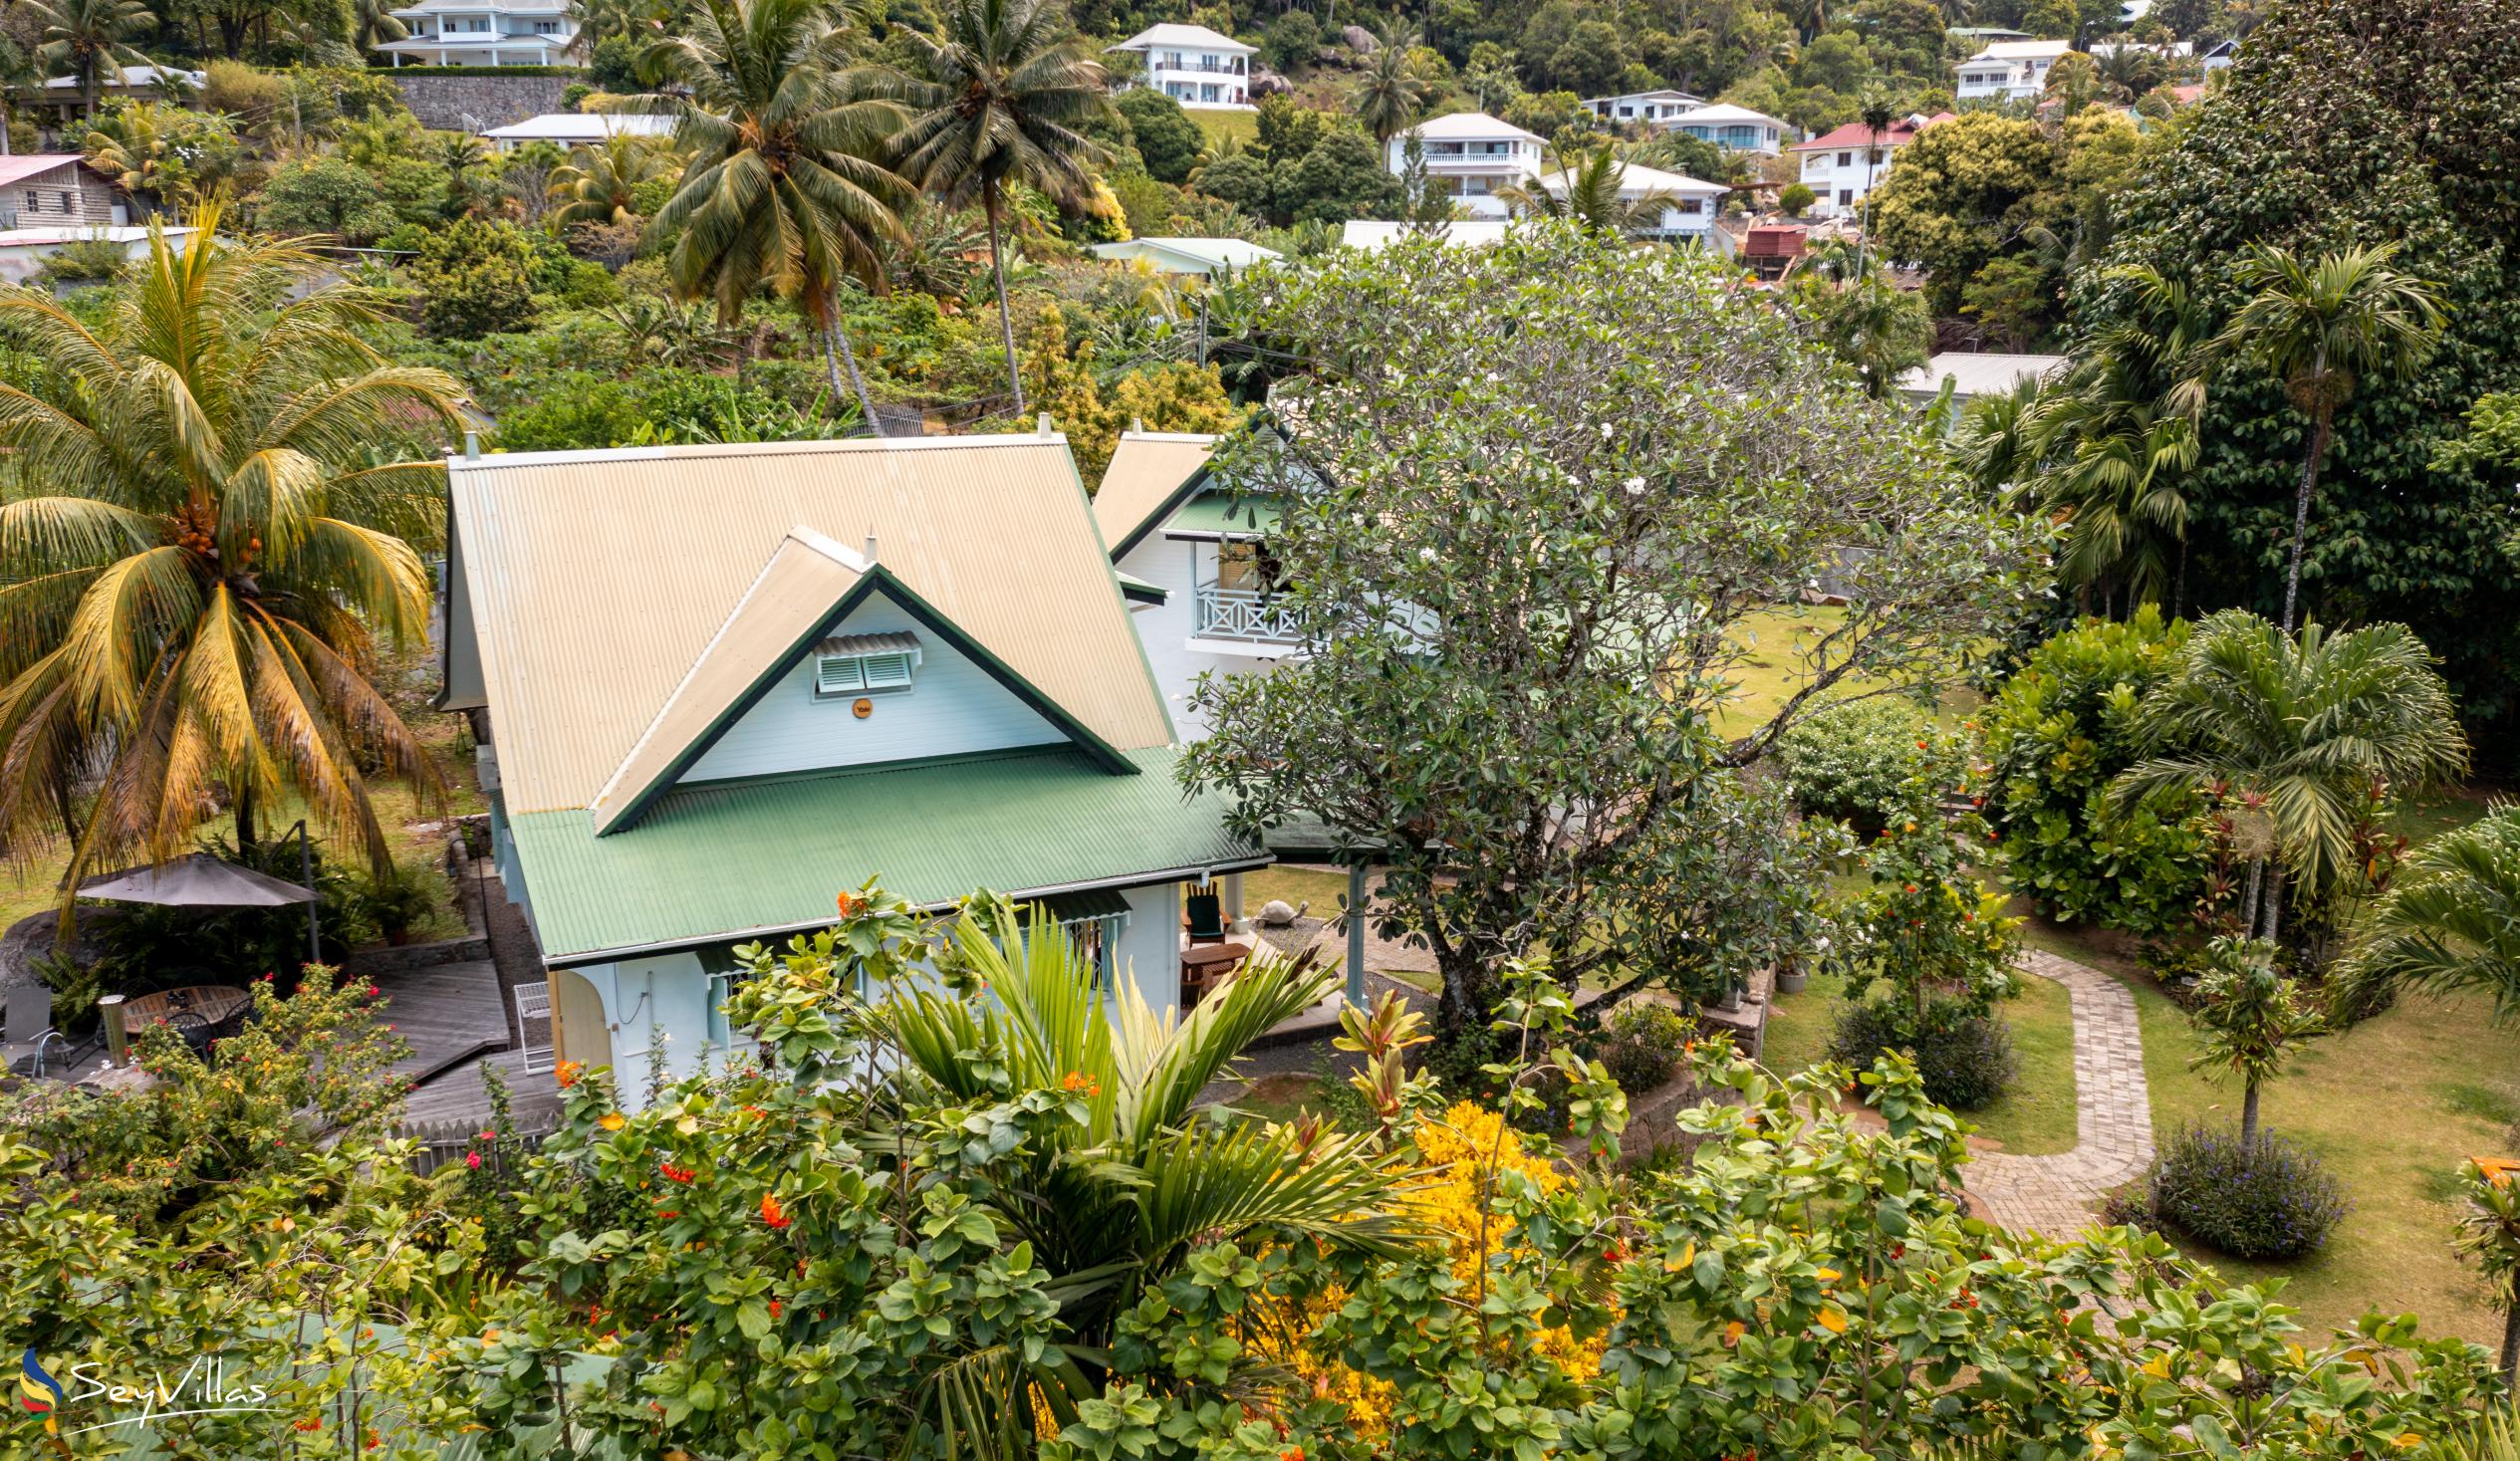 Photo 5: Villa Kordia - Outdoor area - Mahé (Seychelles)